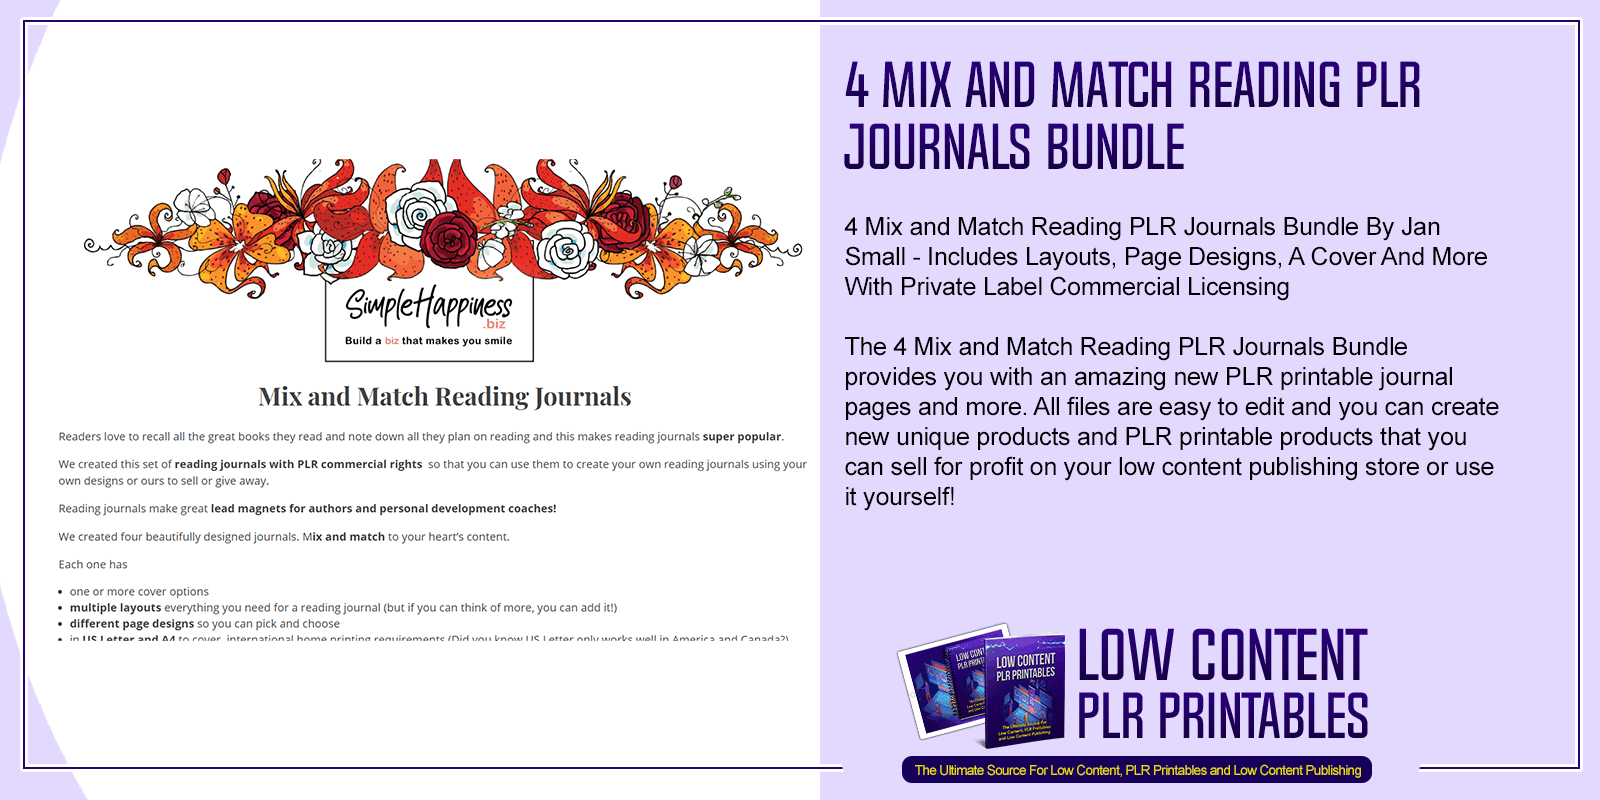 4 Mix and Match Reading PLR Journals Bundle